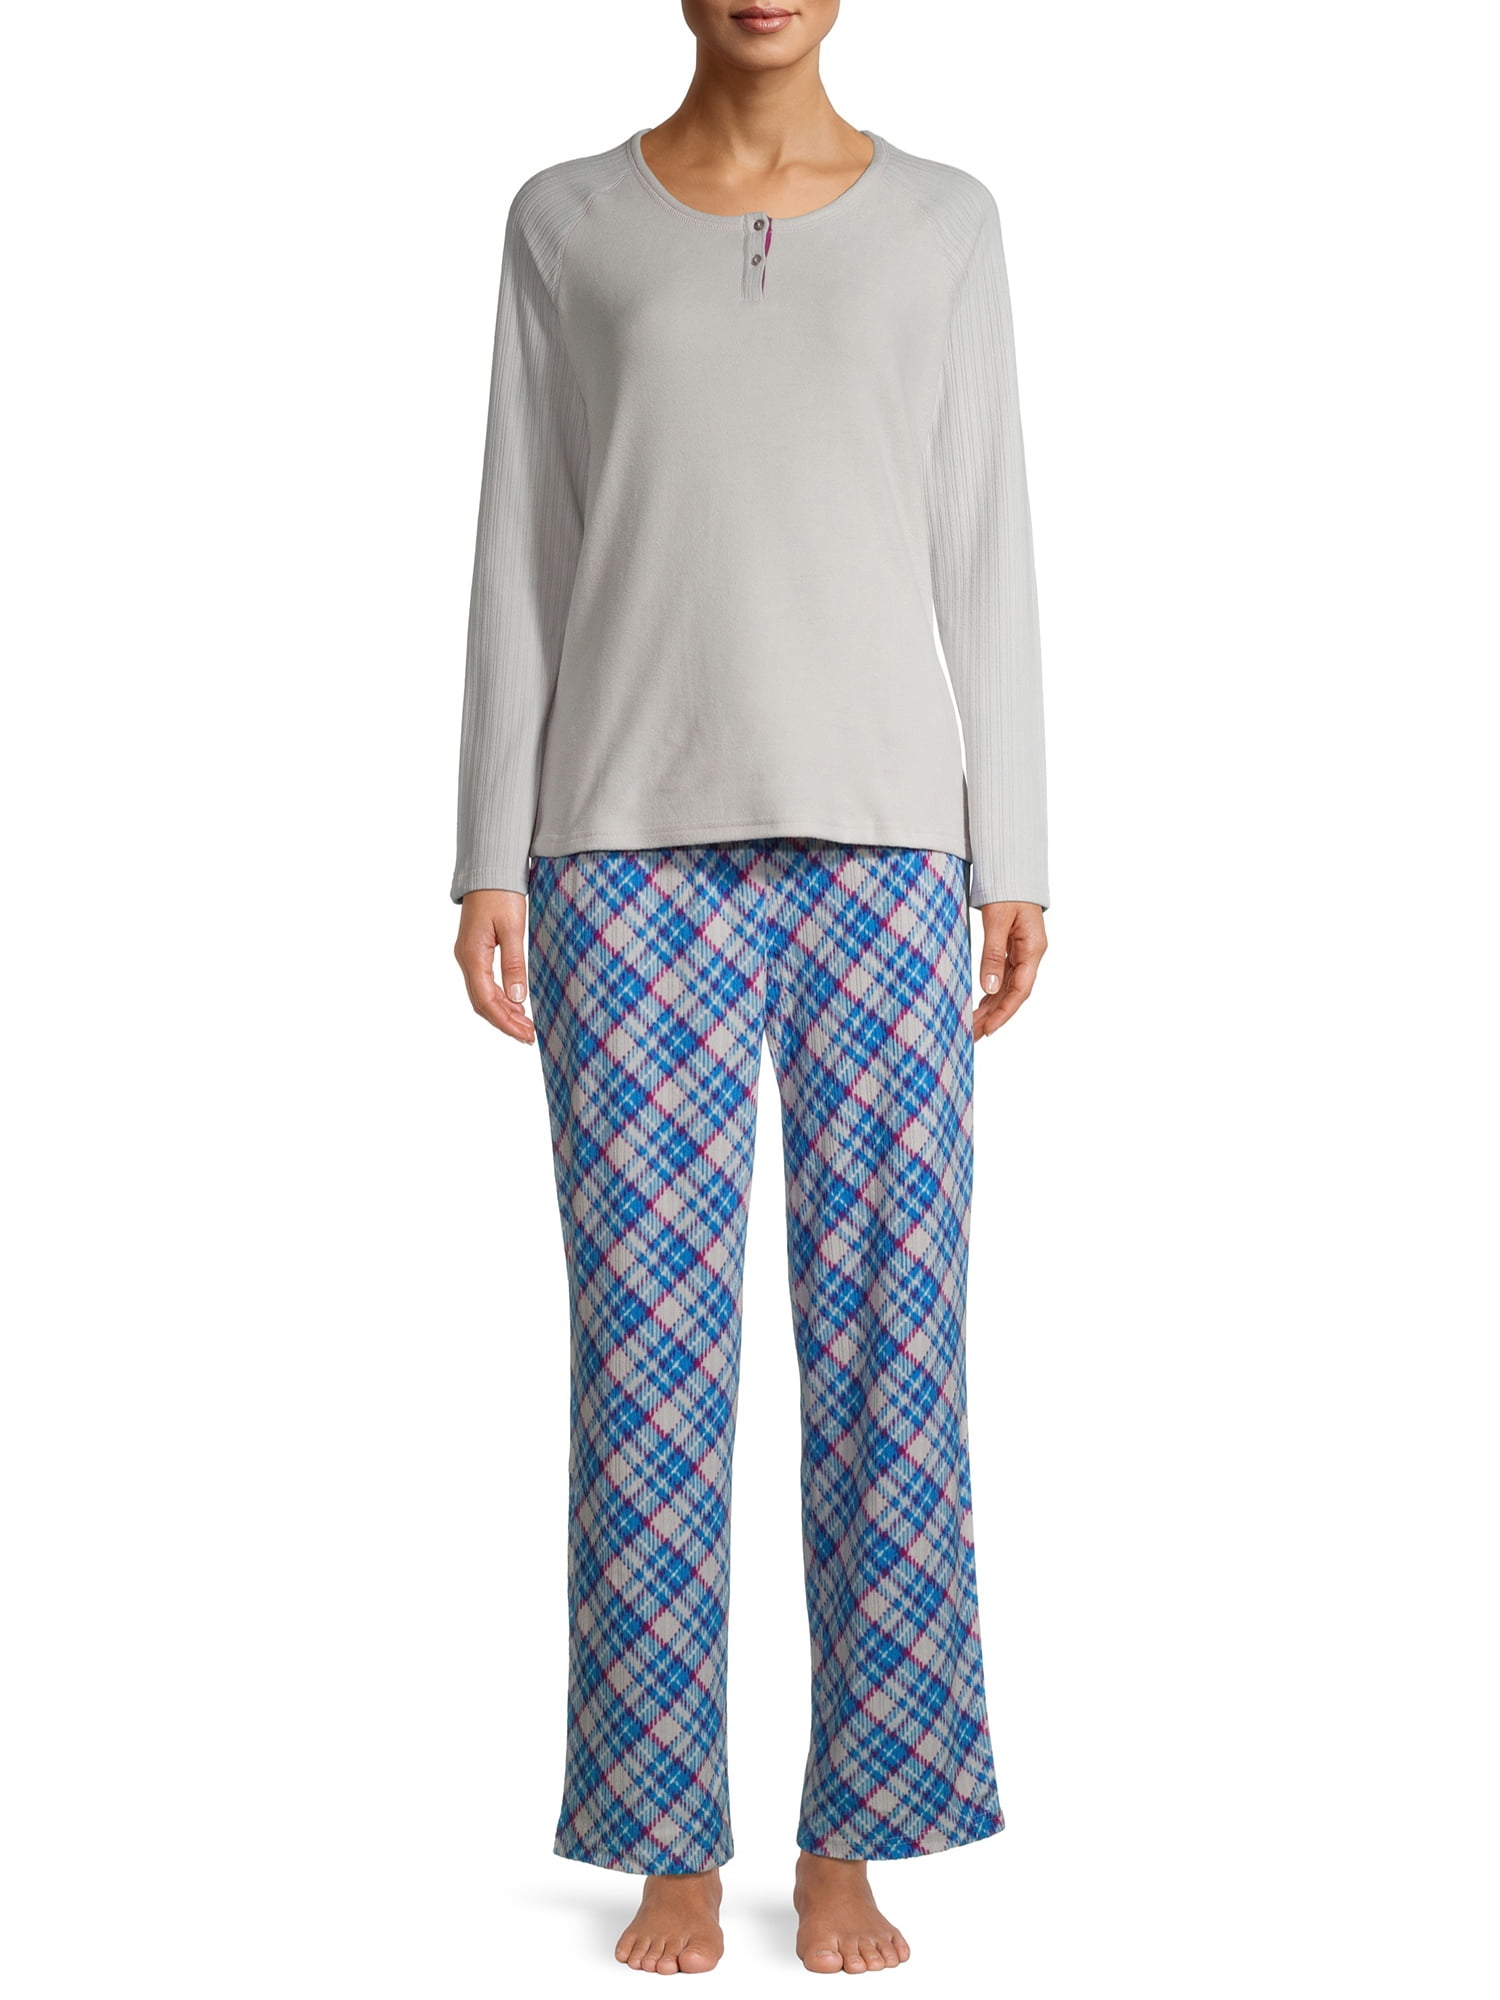 Hanes Women's Stretch Fleece Long Sleeve Top and Pants Pajama Set ...